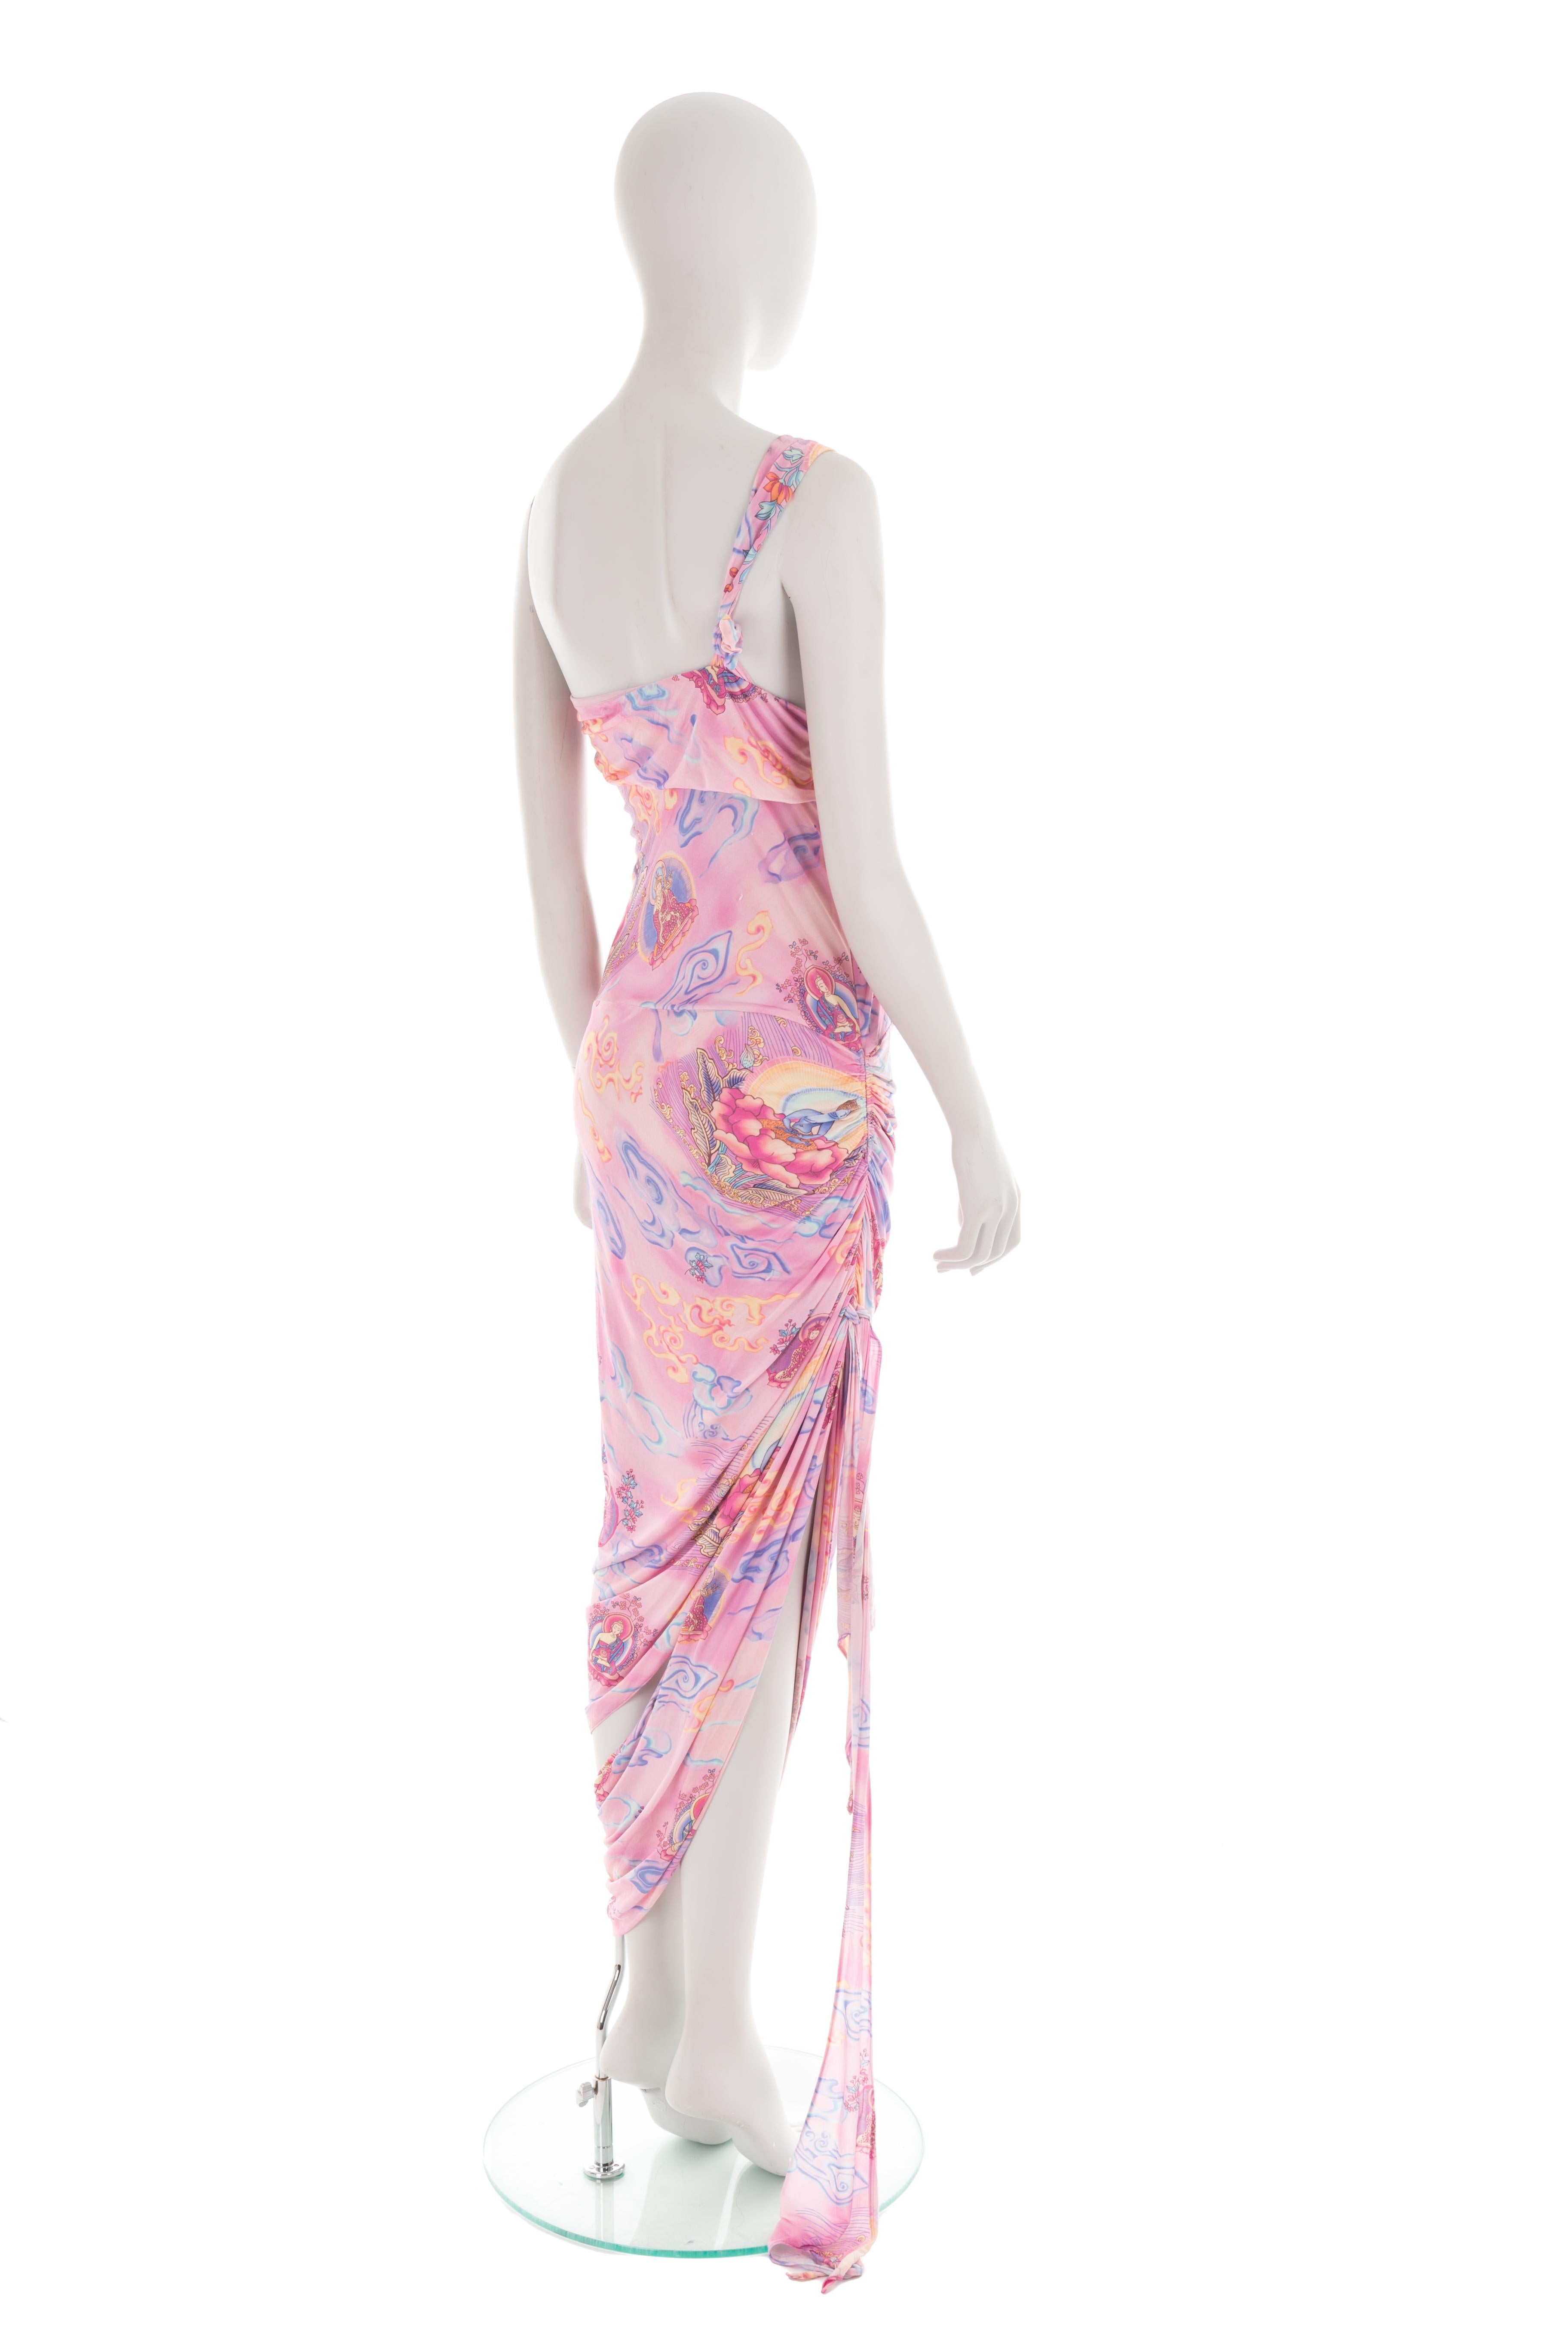 Emanuel Ungaro S/S 2004 pink “Shiva” print draped cut-out dress For Sale 2